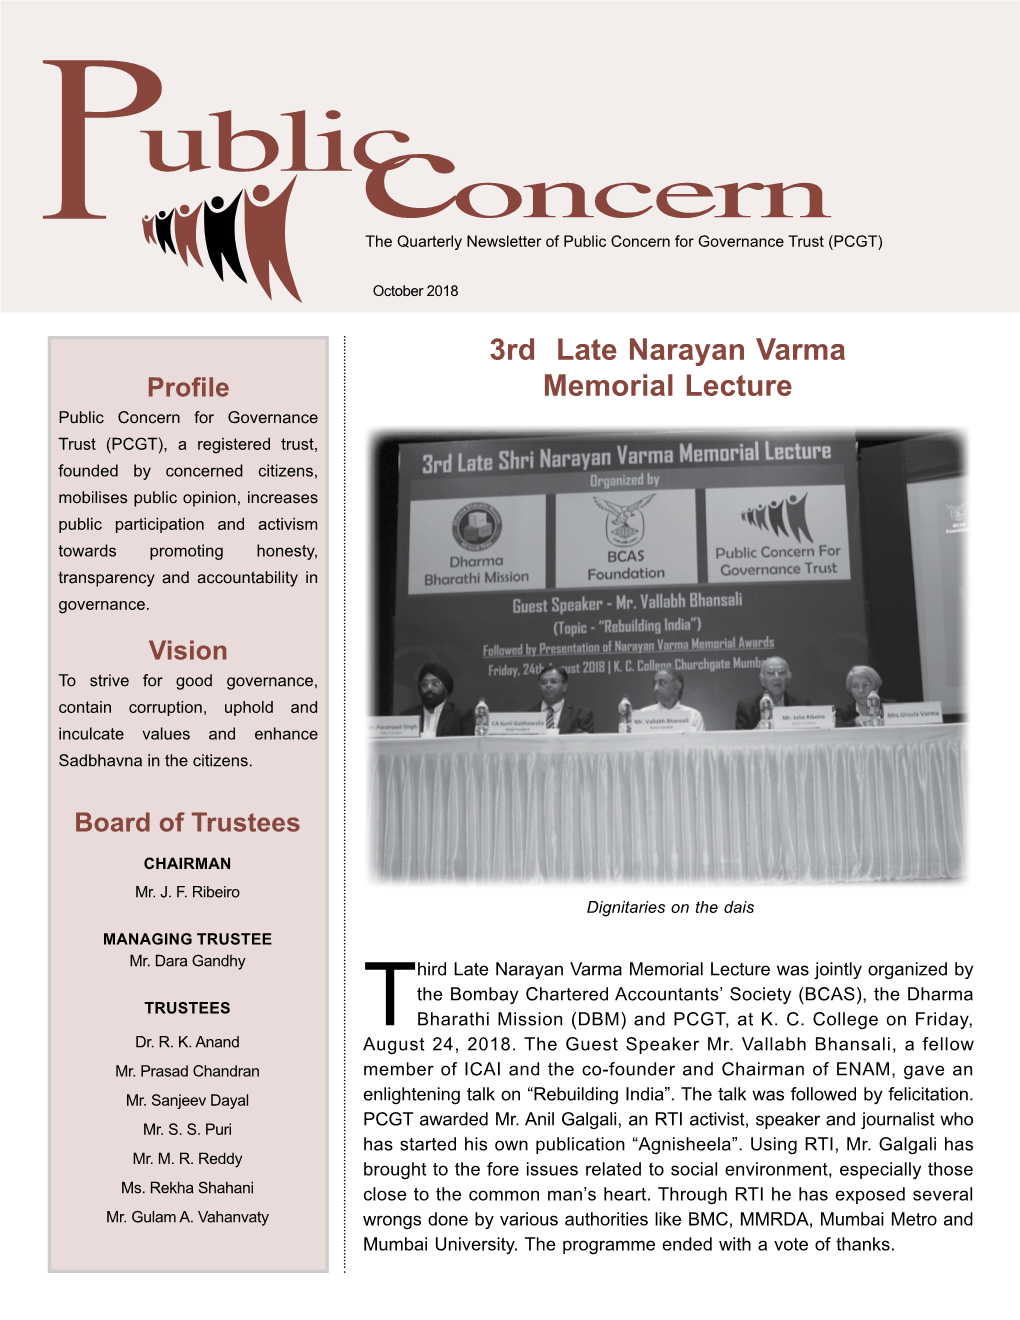 3Rd Late Narayan Varma Memorial Lecture